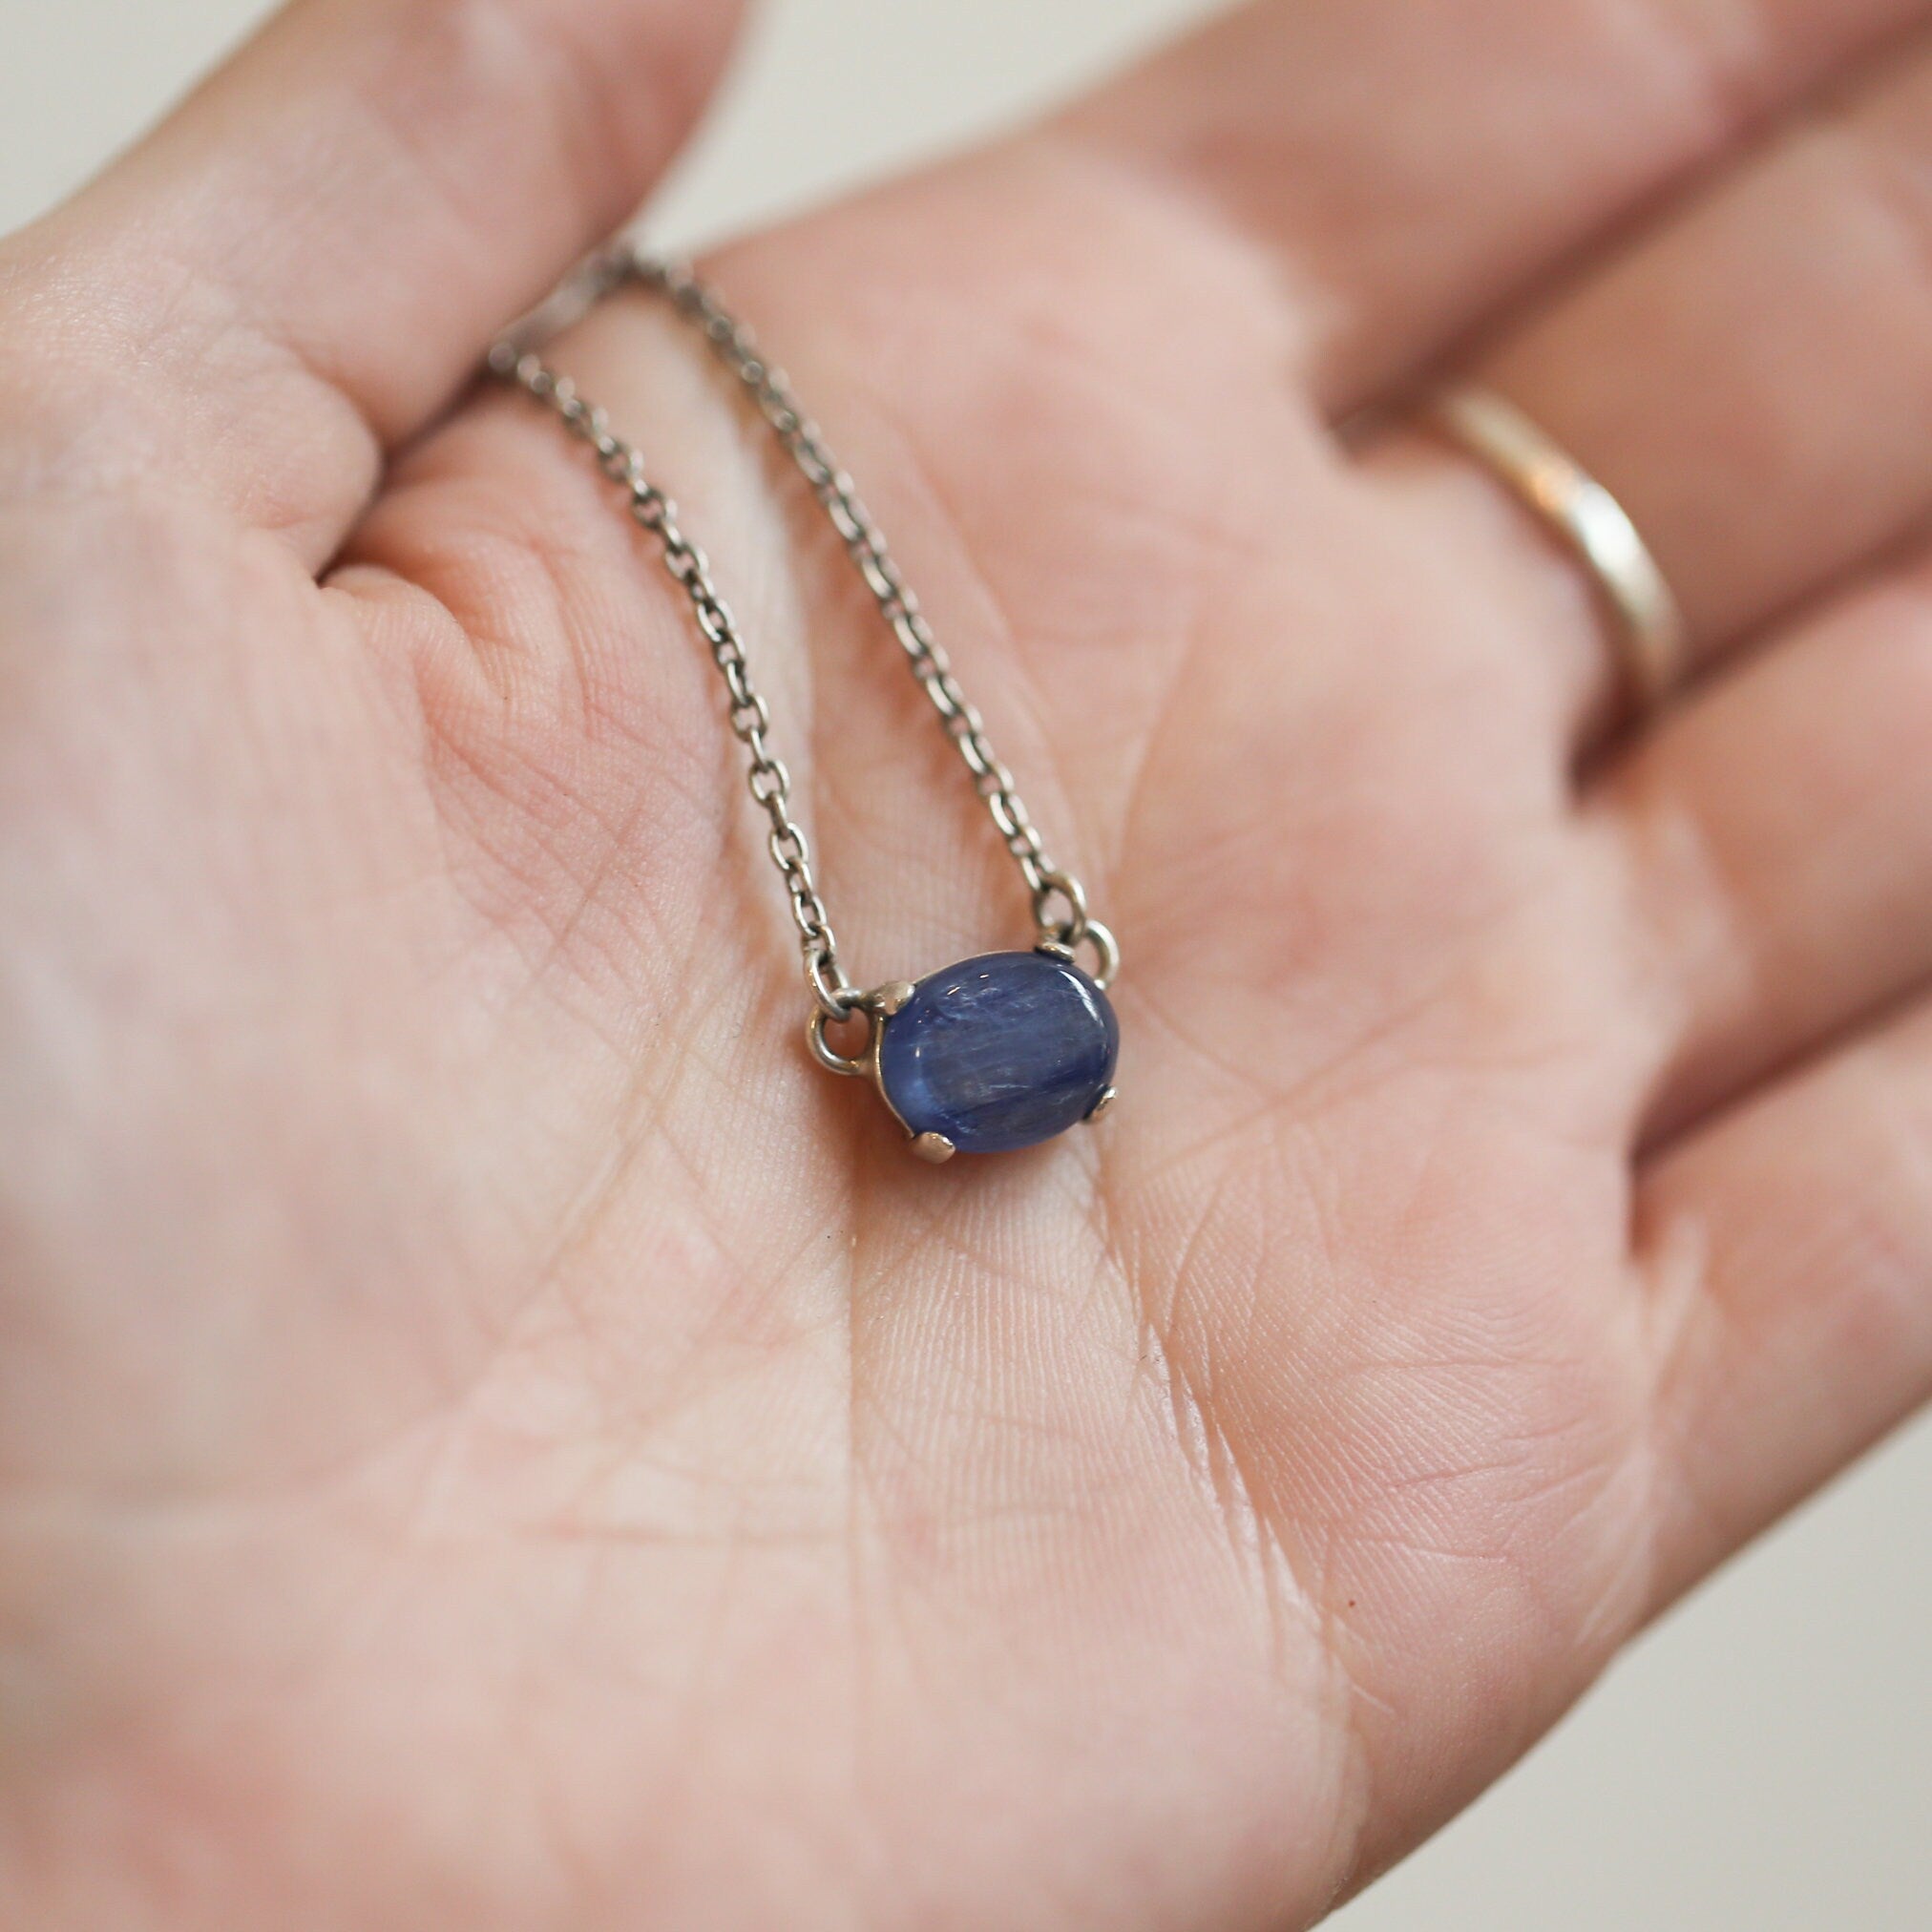 D3014 - 117.5cts Blue Kyanite Necklace,Nugget Kyanite Pendant,Healing Stone